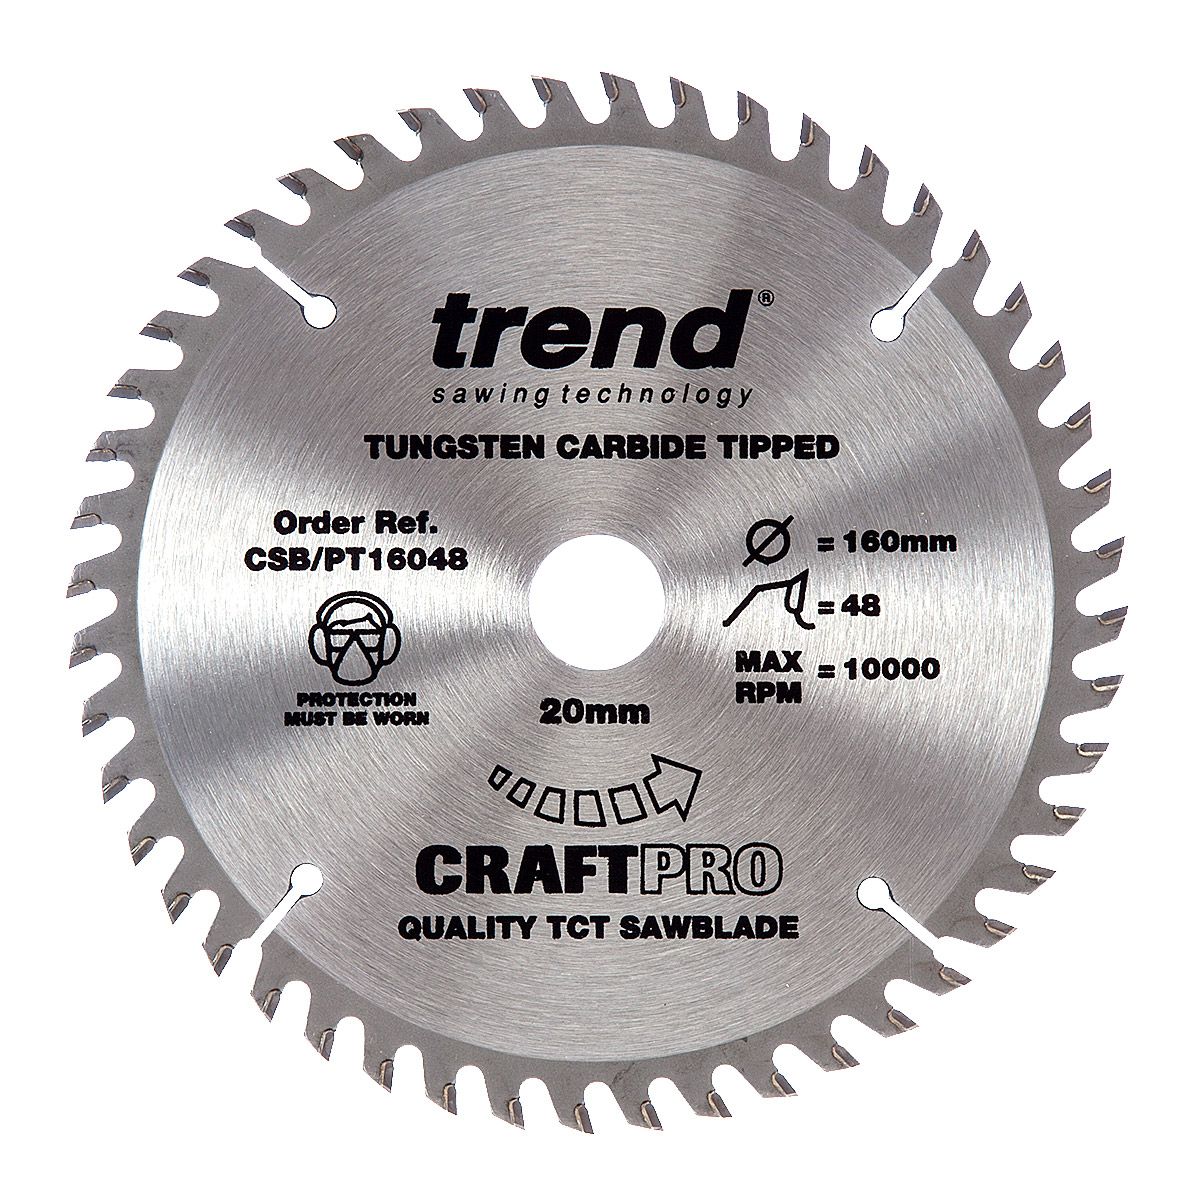 Plunge Saw Blades 160mm X 20mm TCT 48 Tungsten Carbide Teeth for sale online 